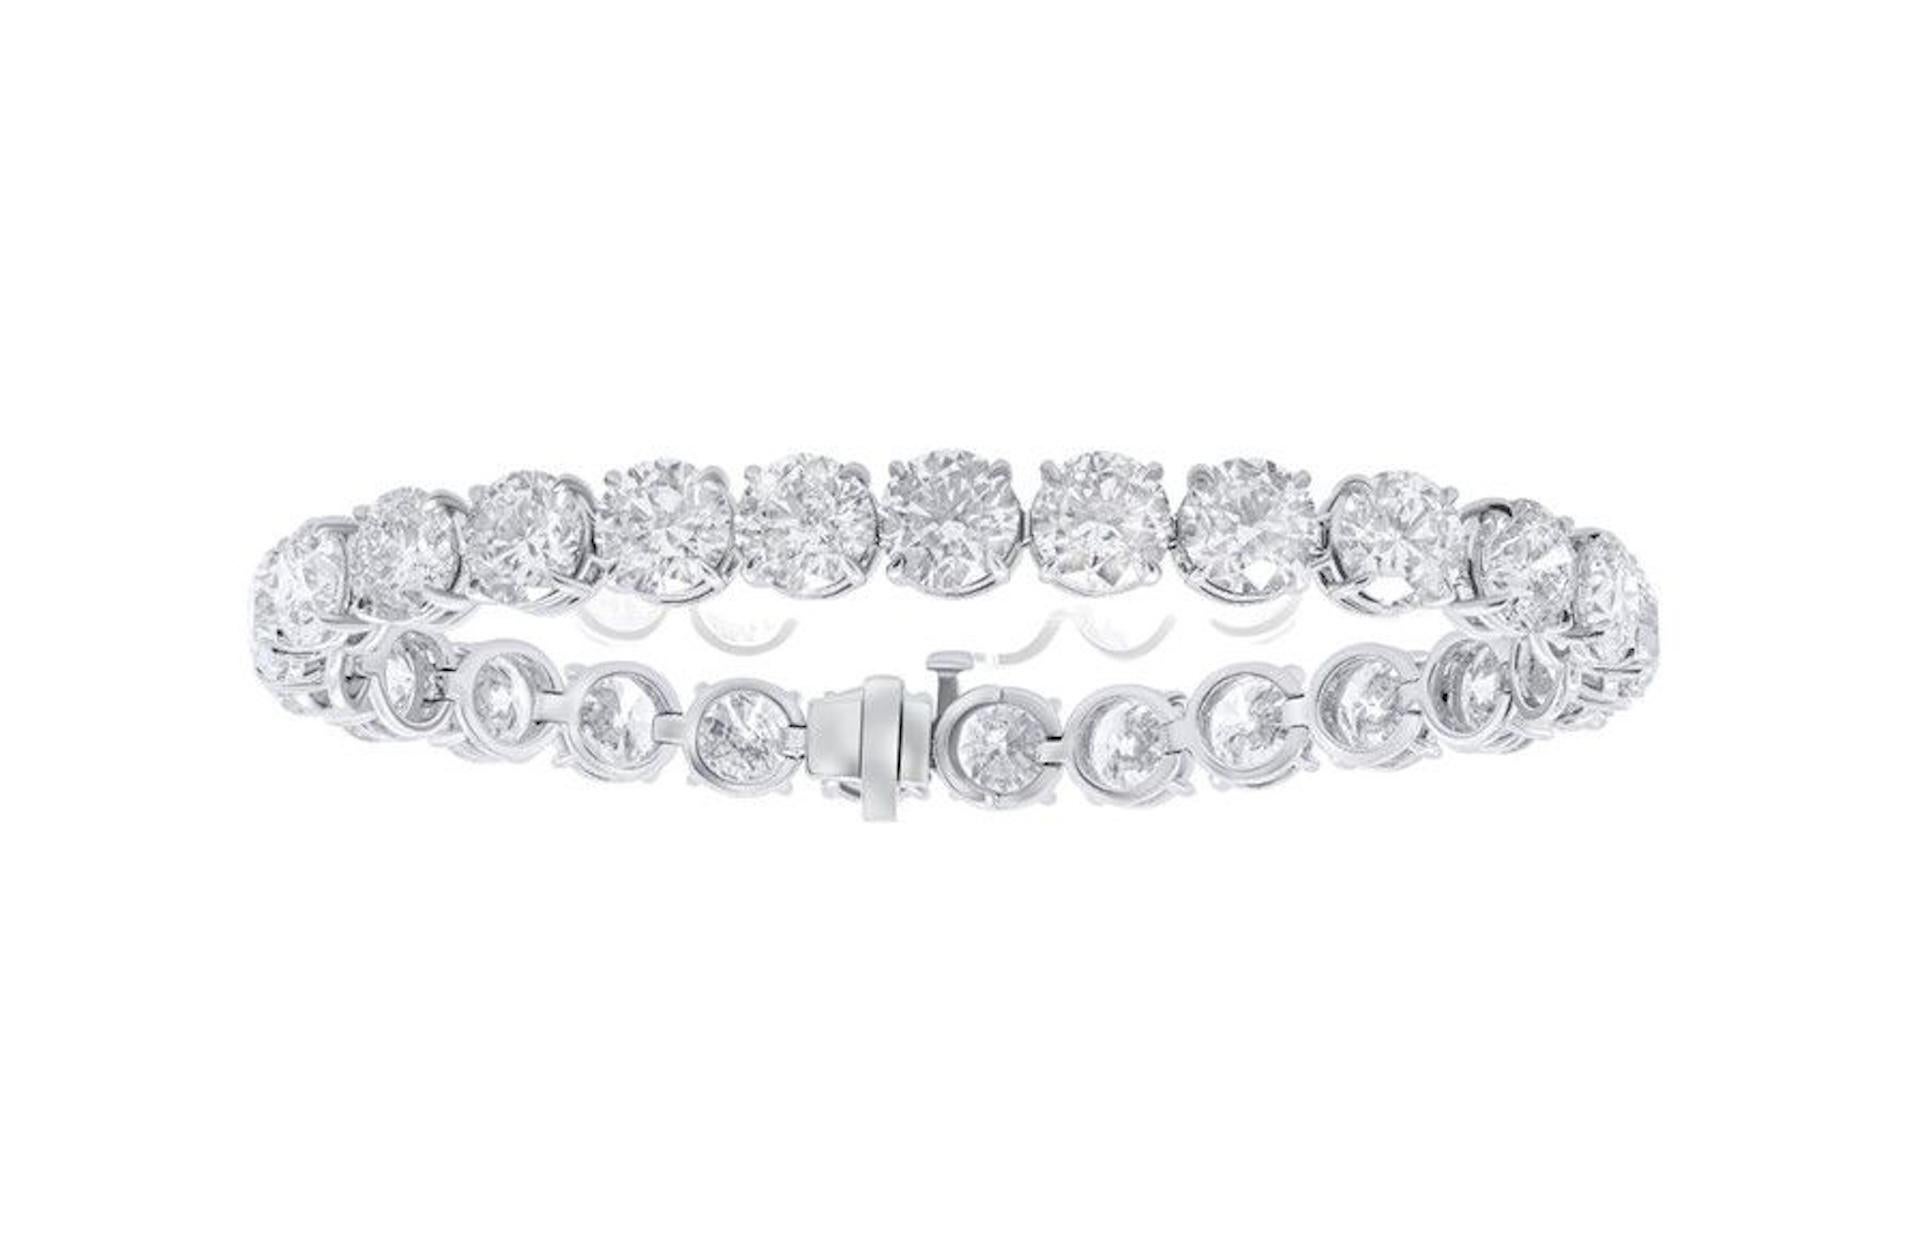 Platinum Custom Diamond Bracelet 26.05 Cts Round Cut Diamonds 1 carat each. GIA Certified IJ Color SI Clarity. Excellent Cut.